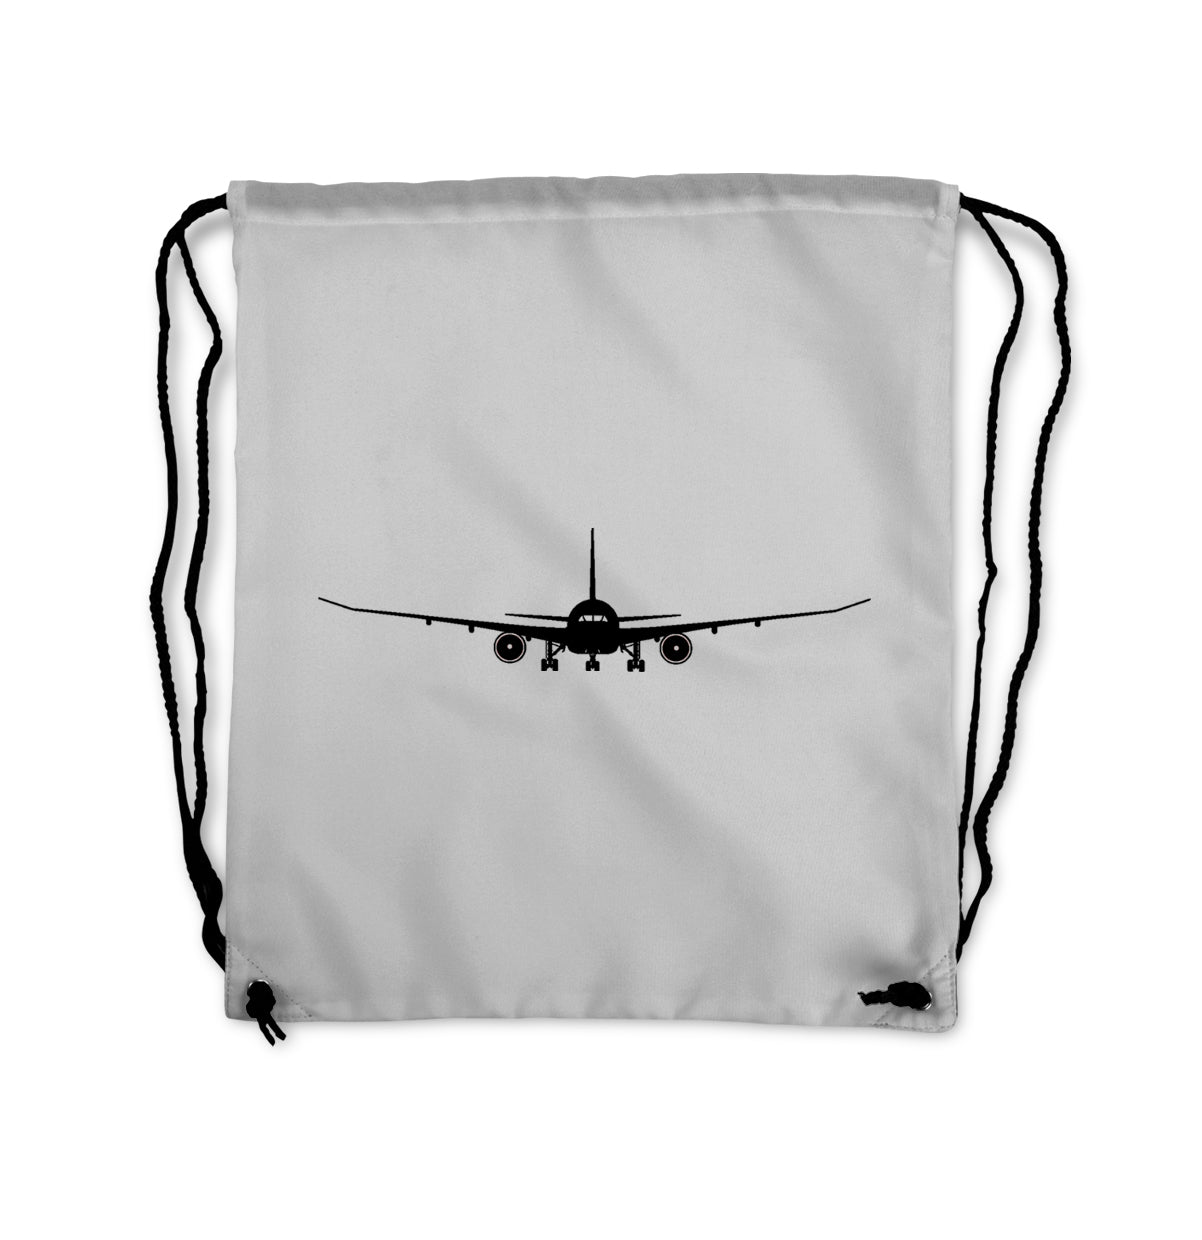 Boeing 787 Silhouette Designed Drawstring Bags